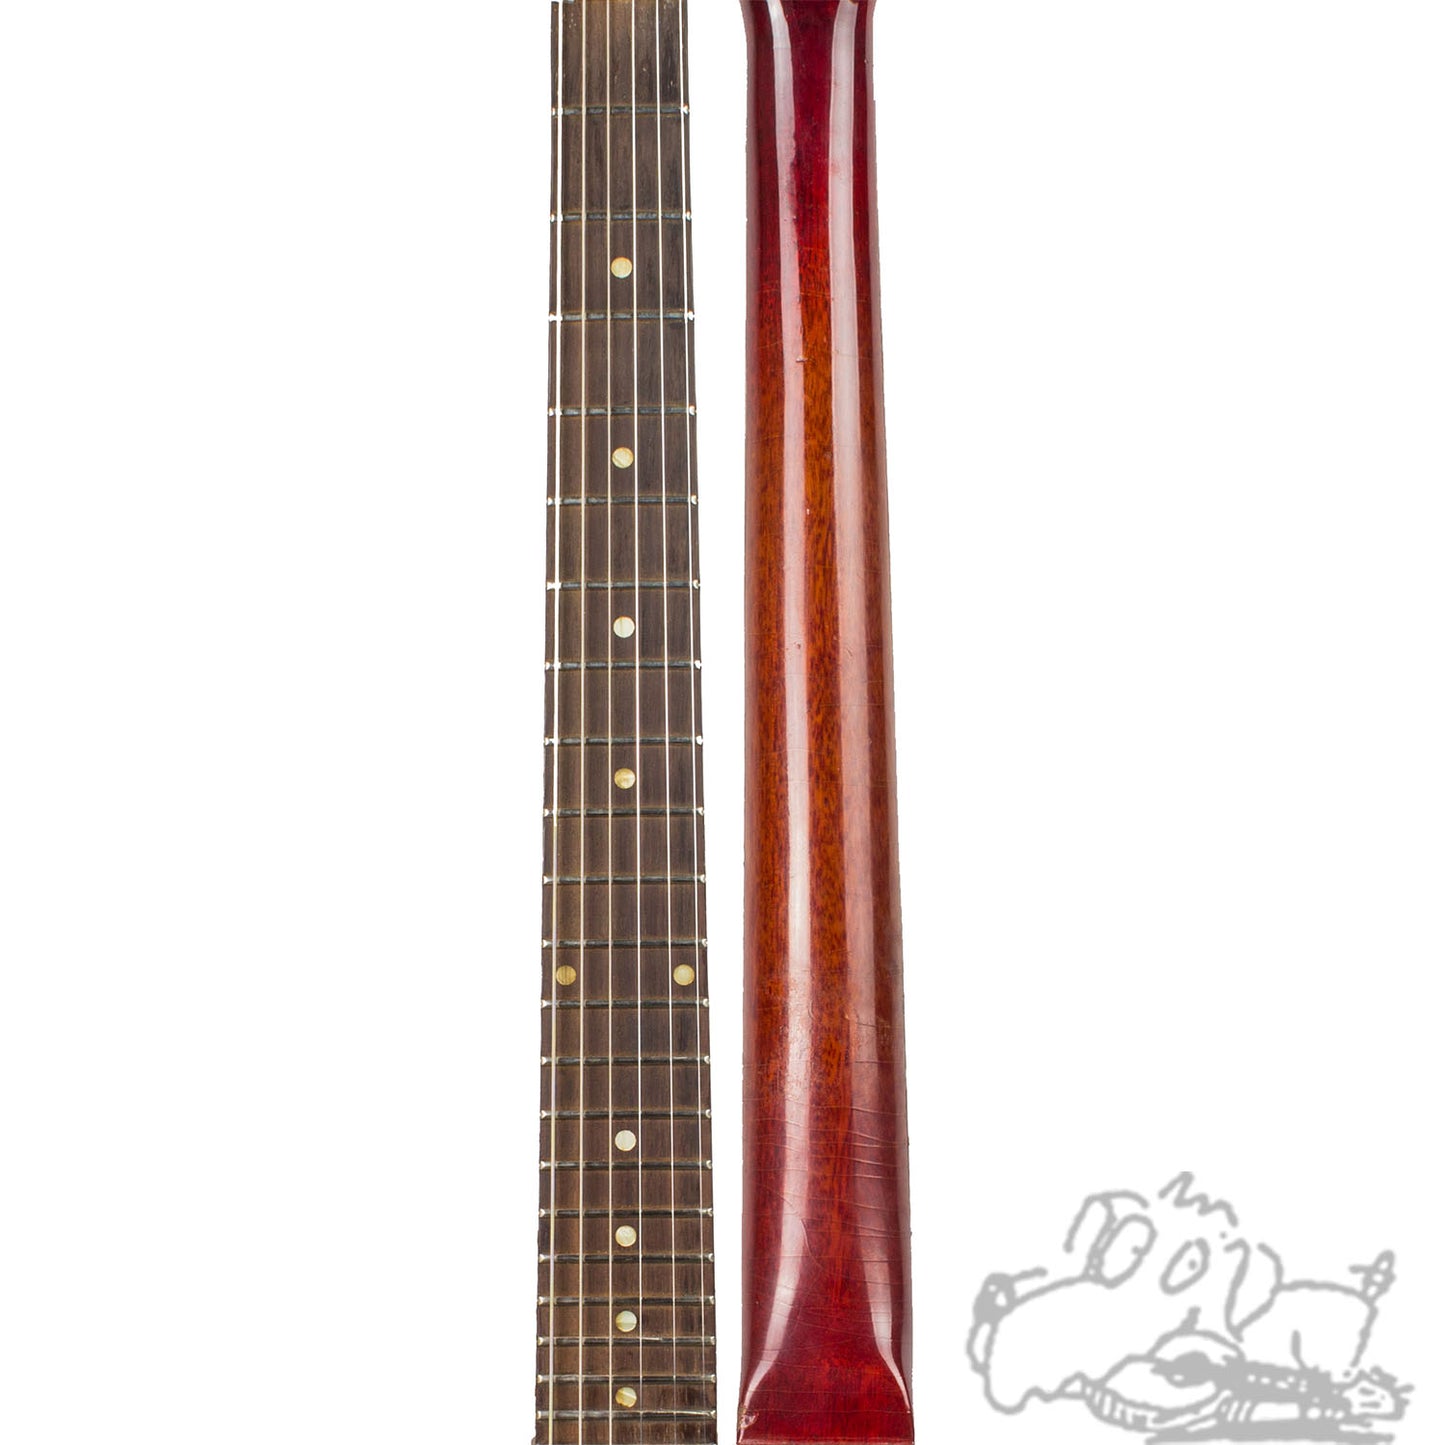 1963 Gibson Les Paul Junior